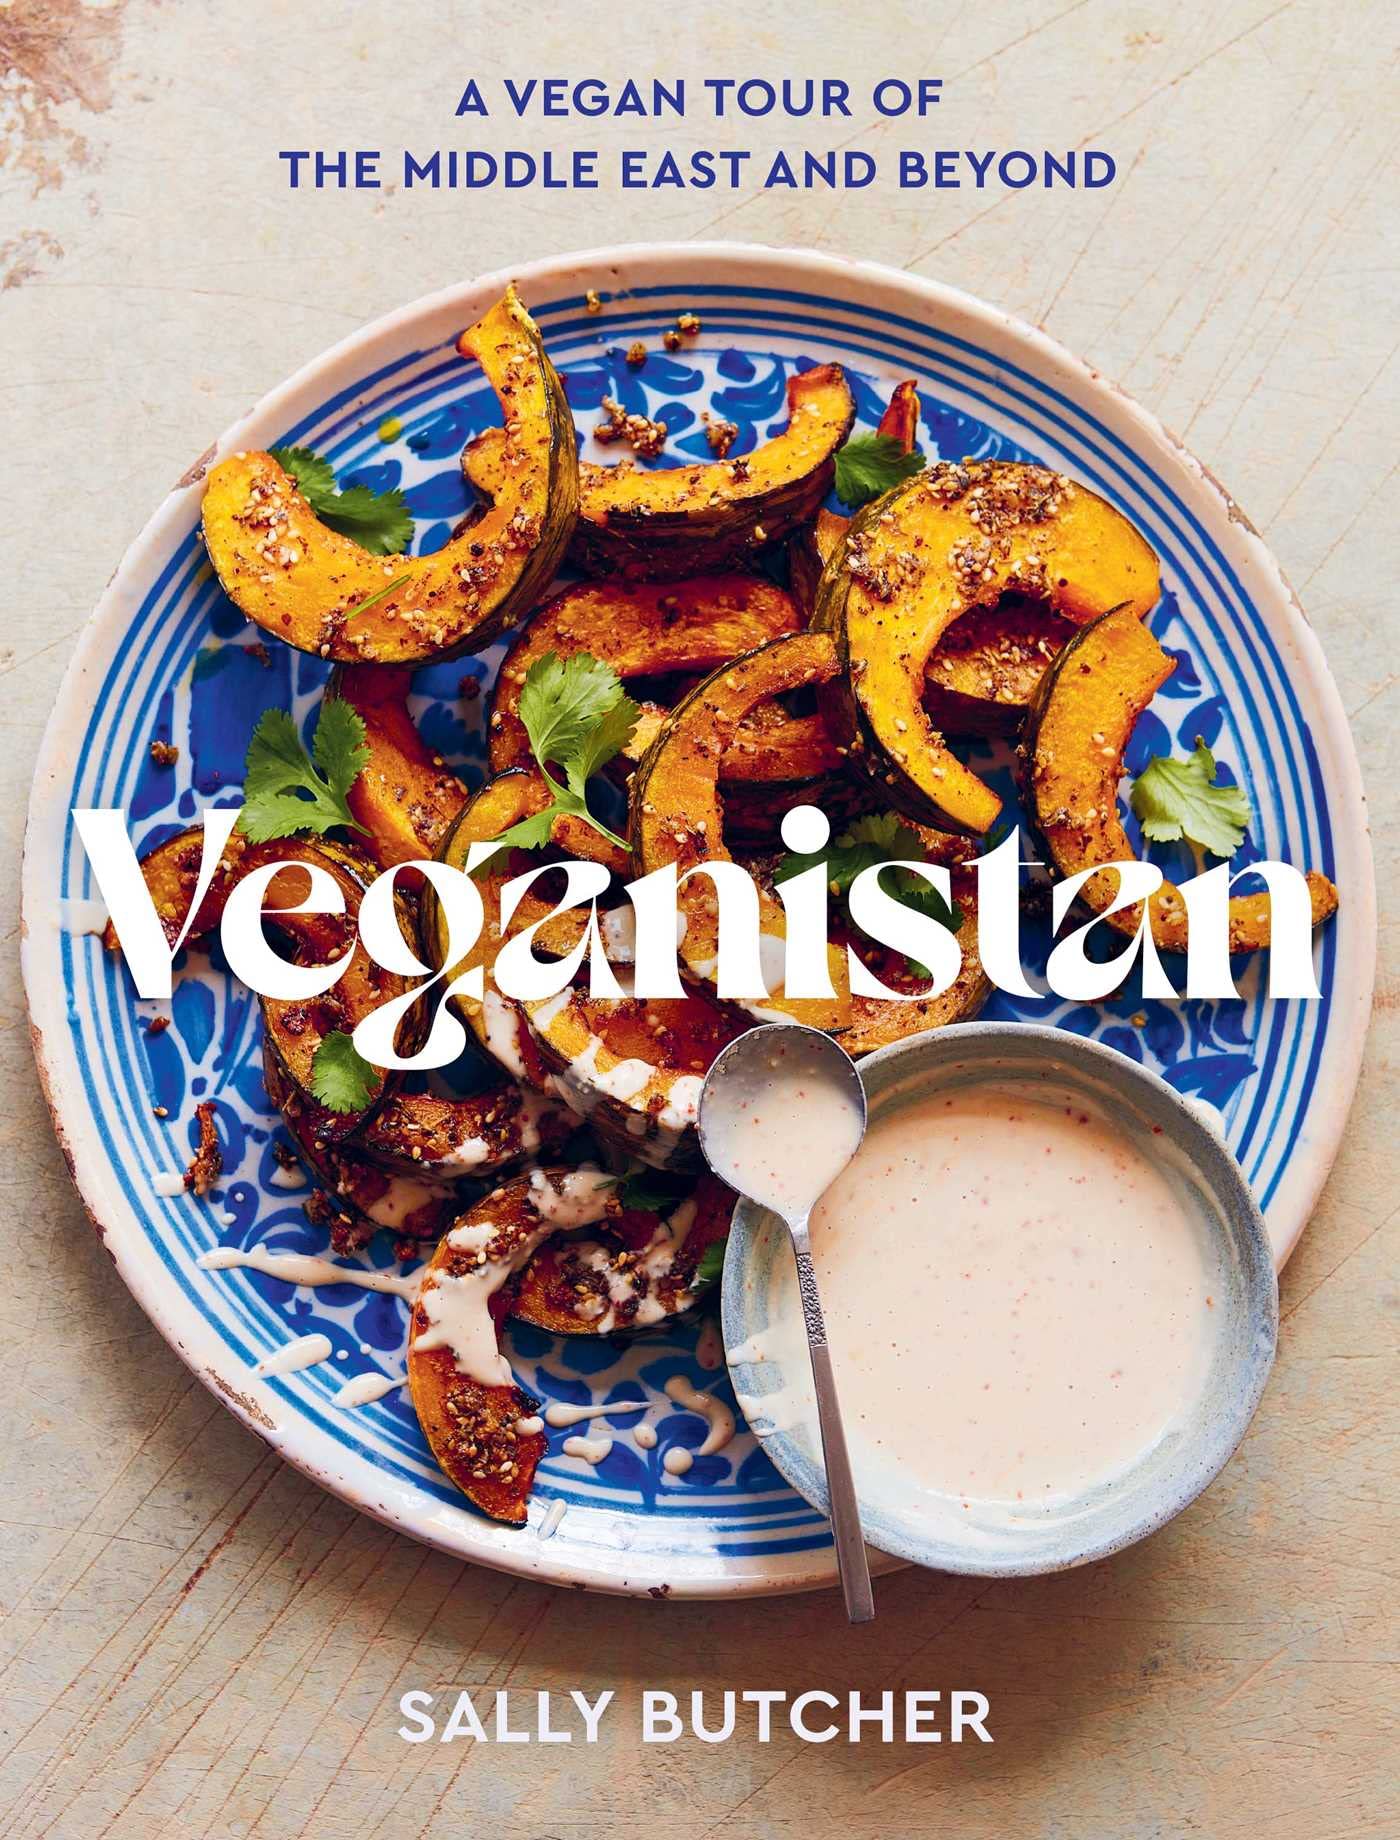 Veganistan: A Vegan Tour of the Middle East & Beyond (Sally Butcher)